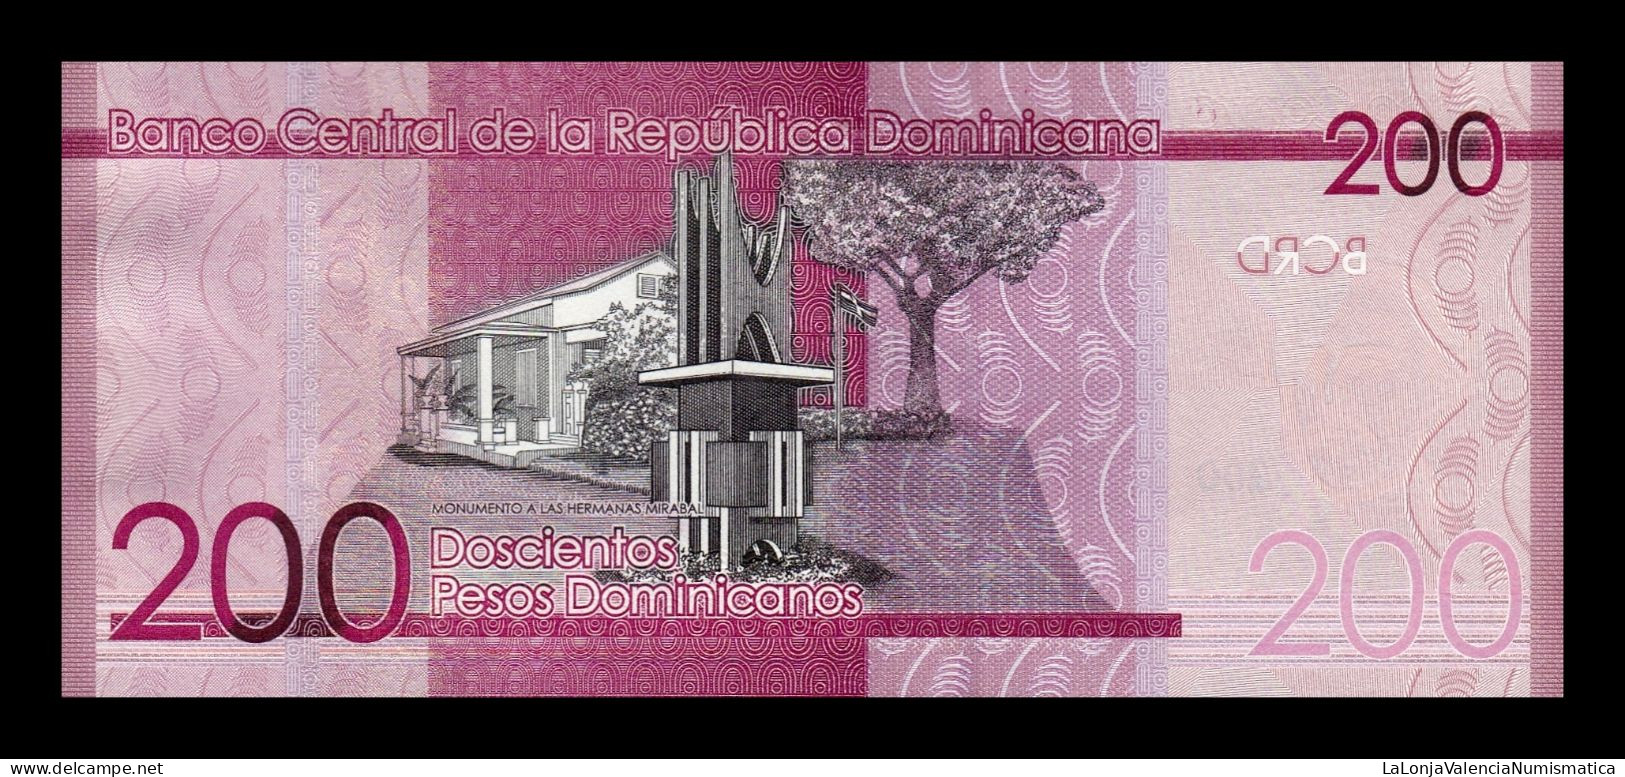 República Dominicana 200 Pesos Dominicanos 2014 Pick 191a Low Serial 885 Sc Unc - Dominicana